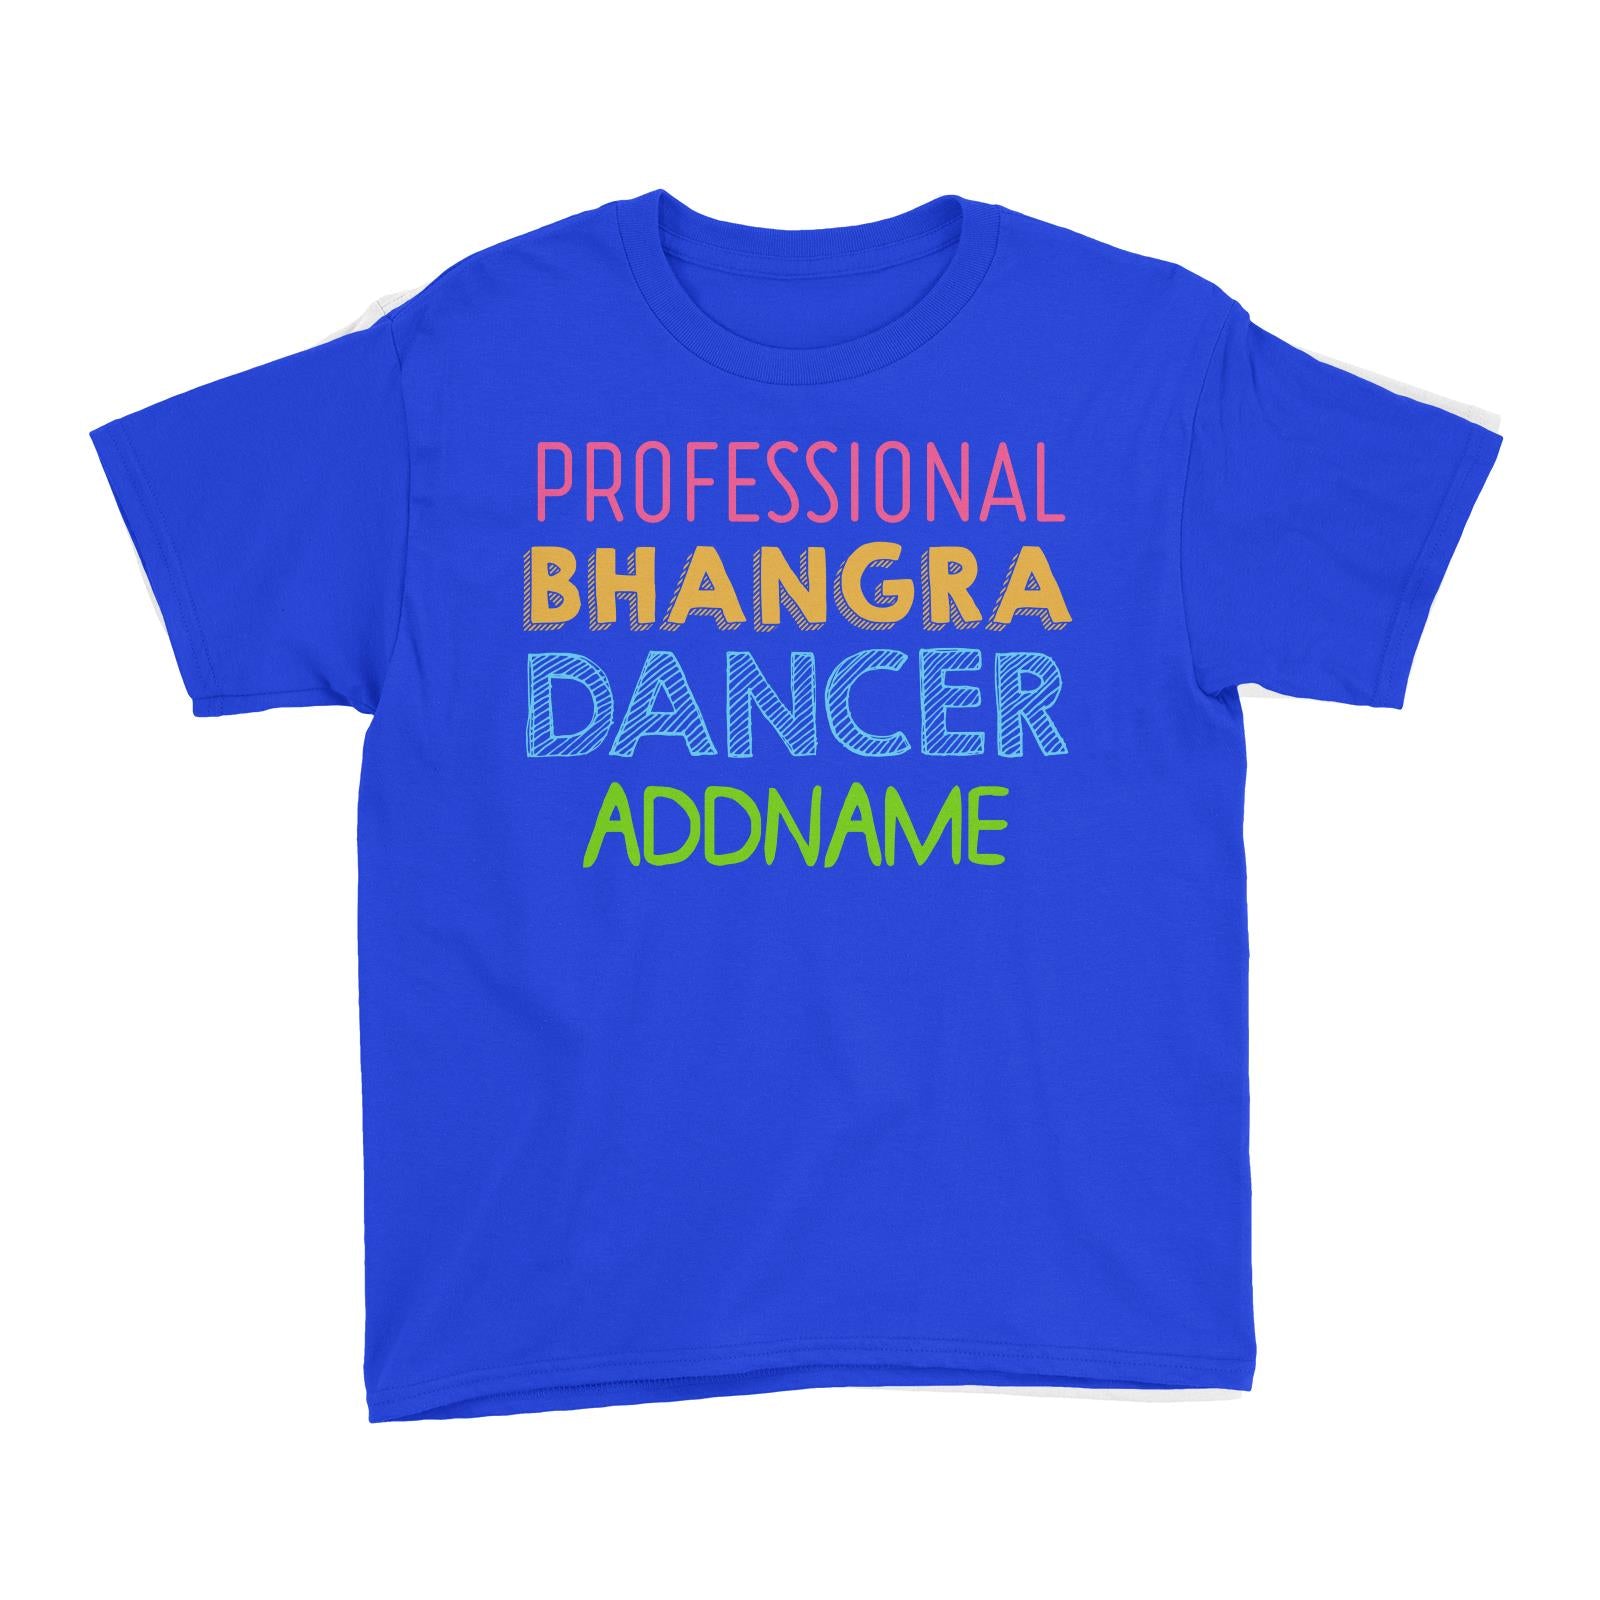 Professional Bhangra Dancer Addname Kid's T-Shirt